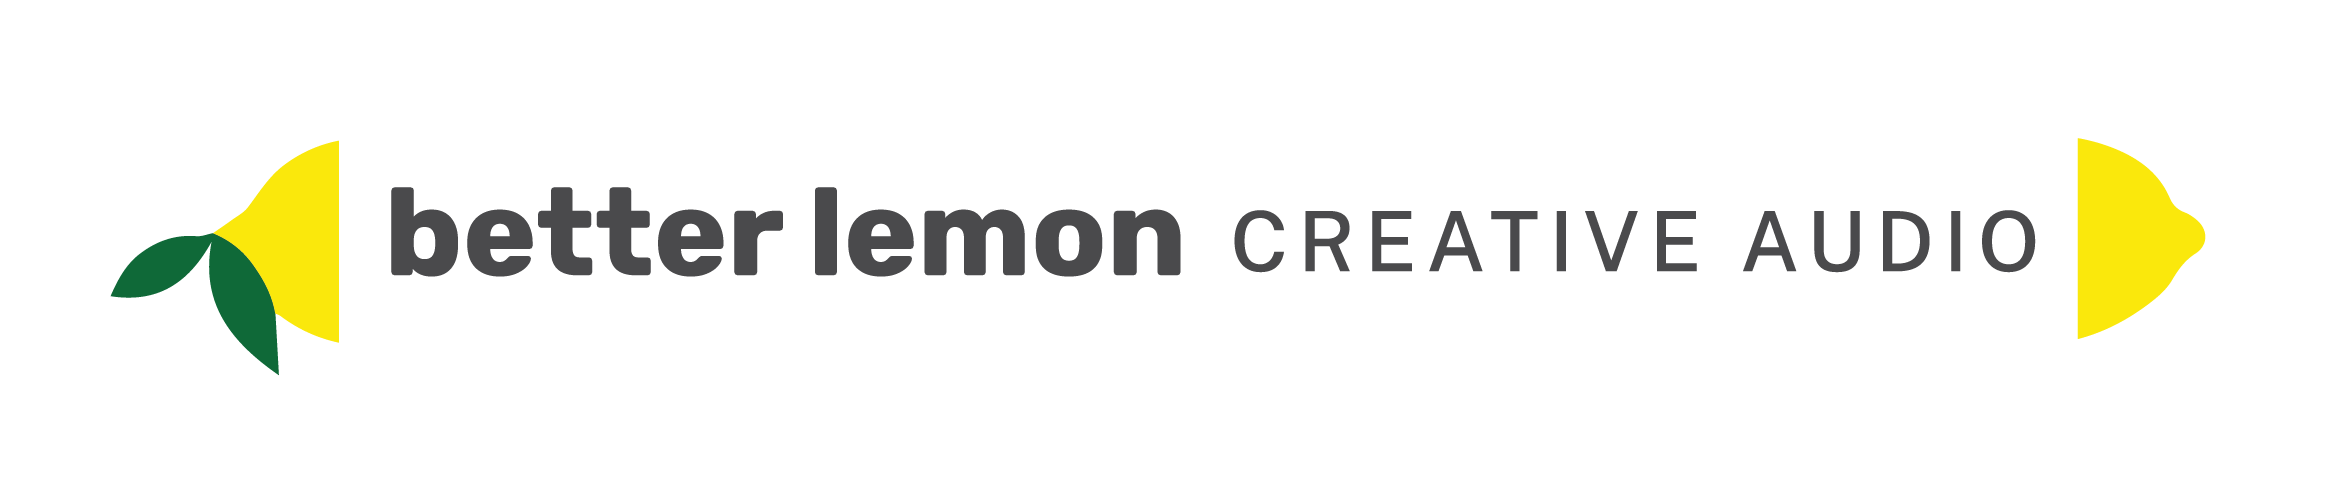 Better Lemon Creative Audio